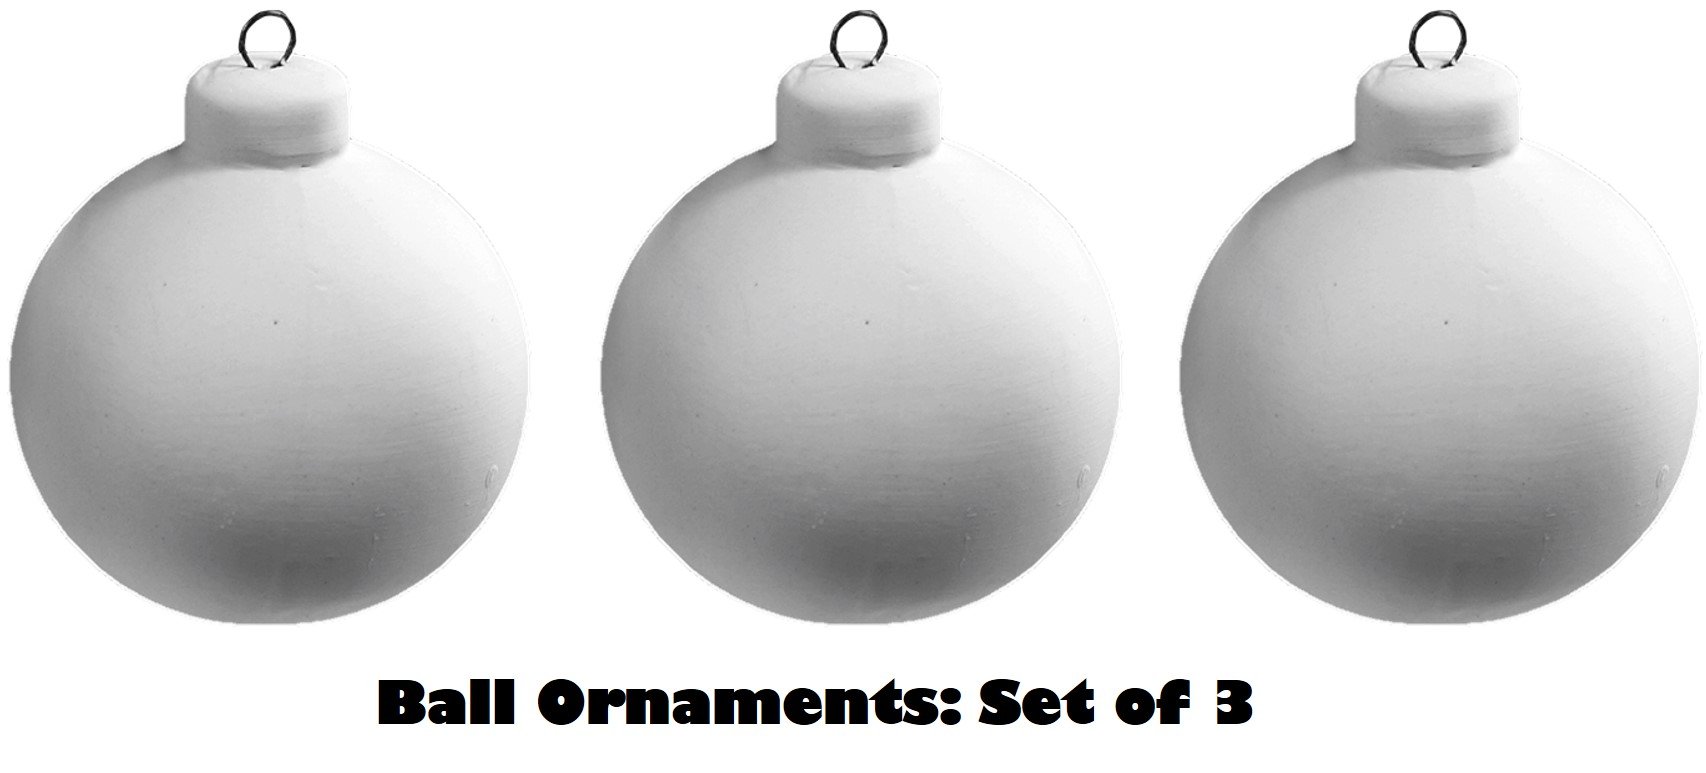 Ball ornaments.jpg